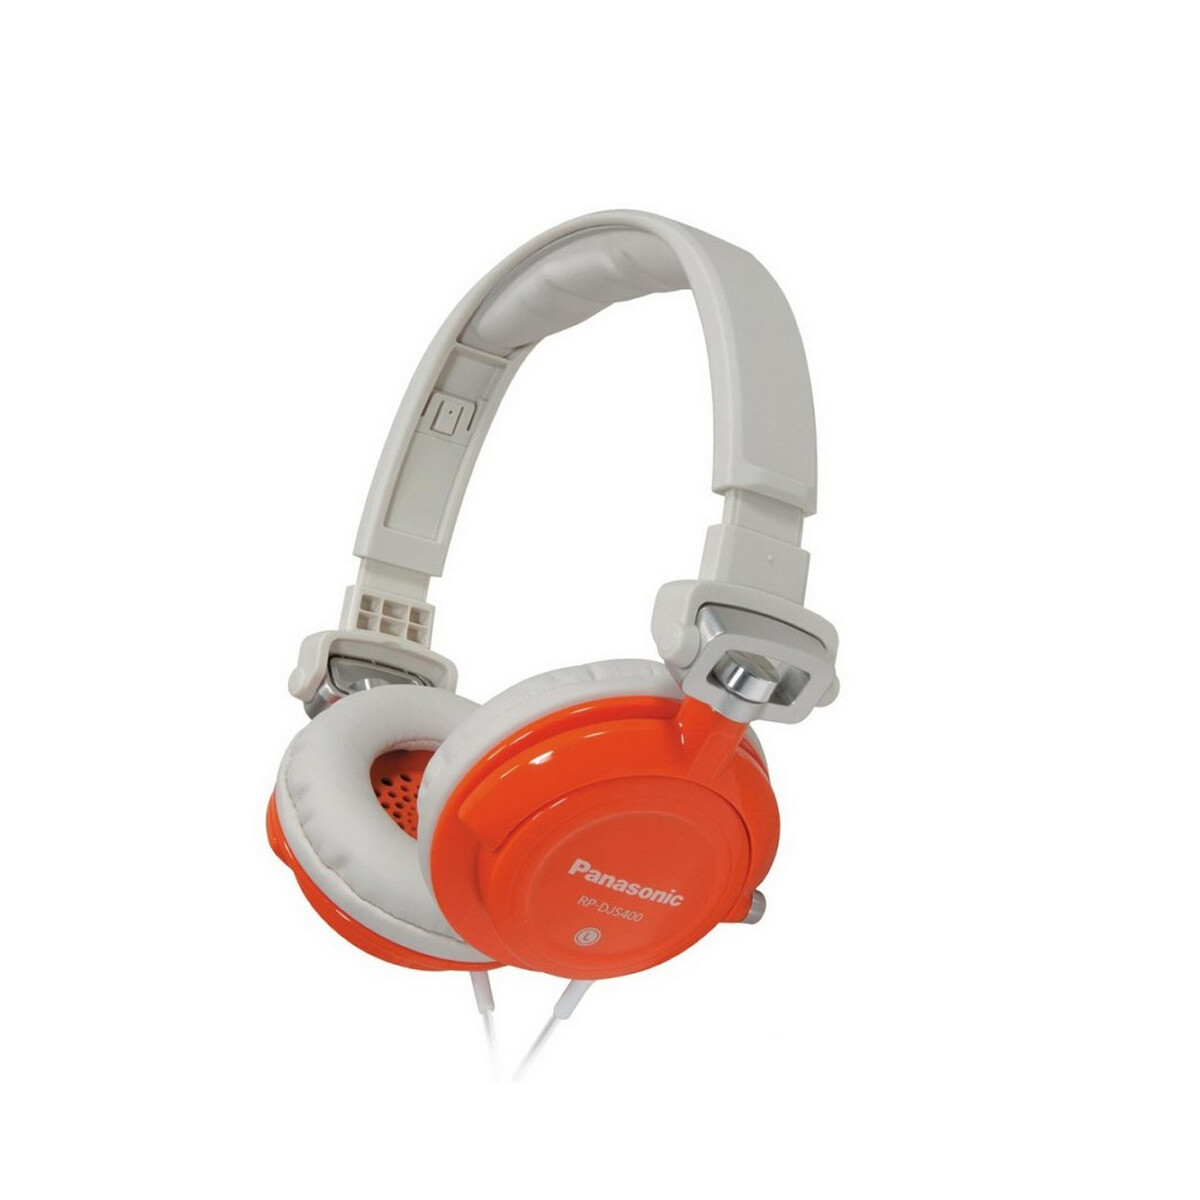 Auricular Panasonic Estilo DJ Cableado - Naranja 